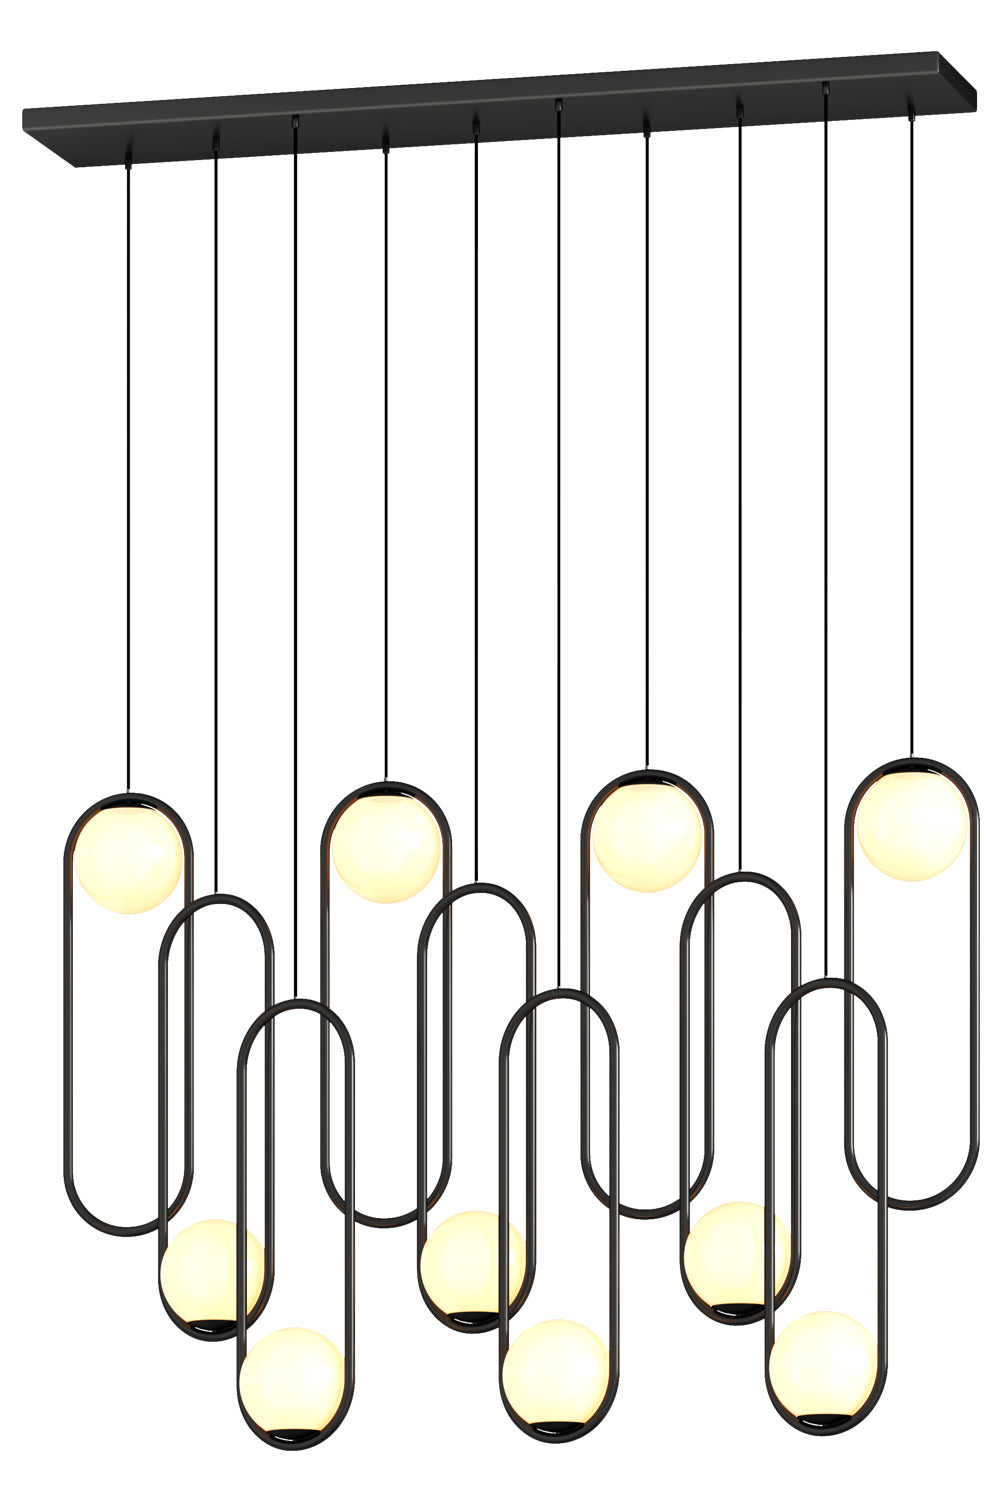 multi-light pendant fixture fpr kitchen